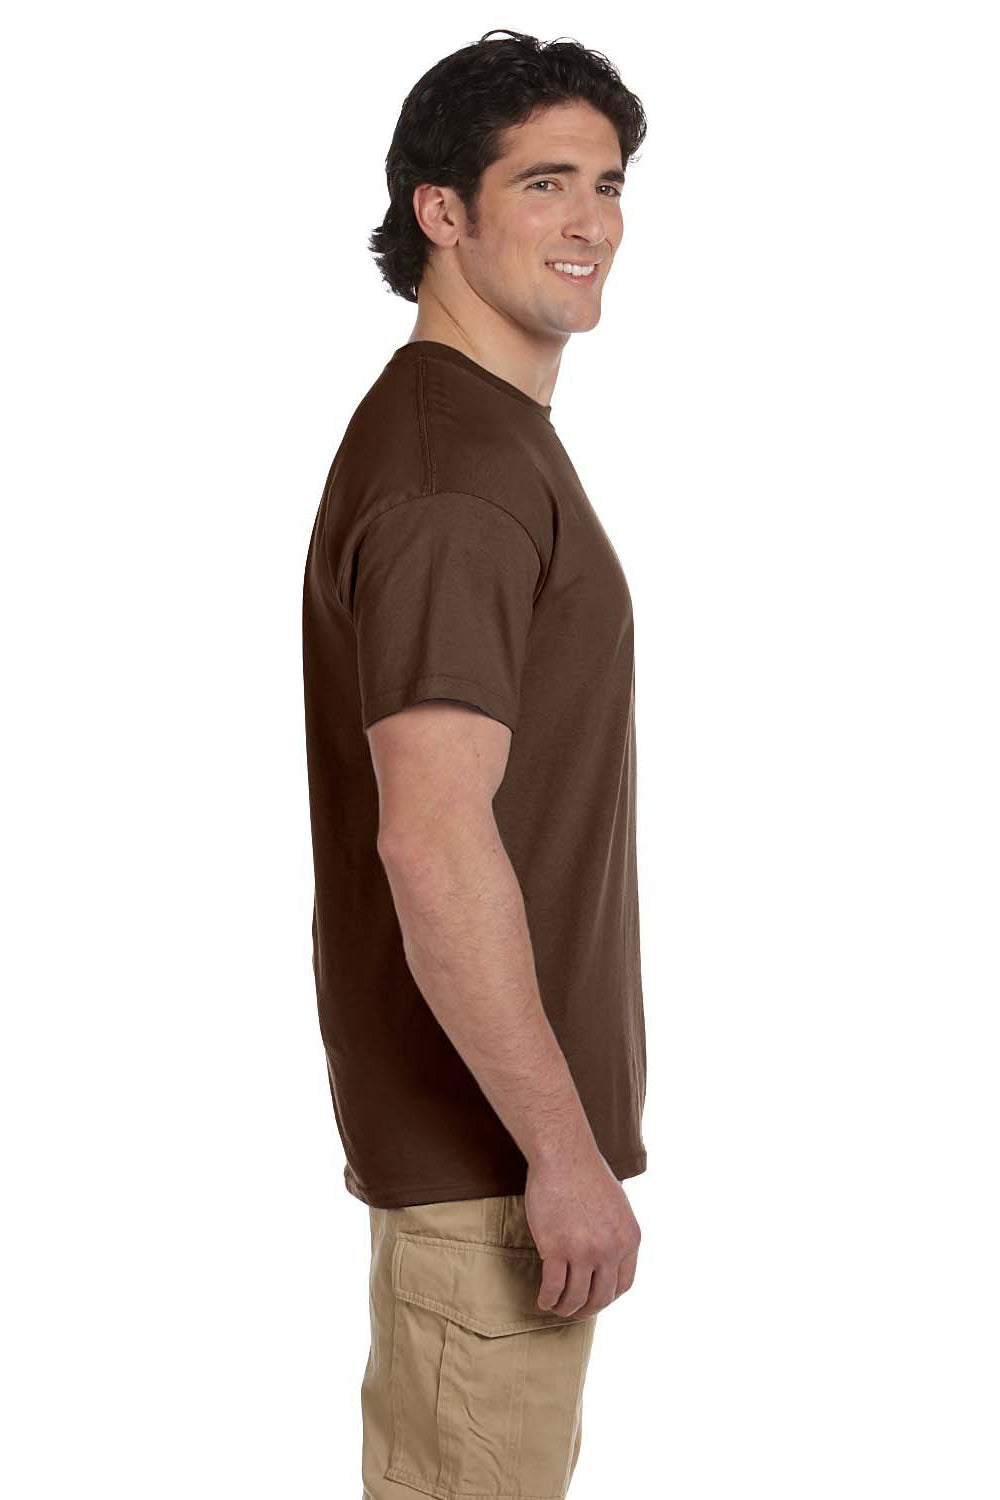 Short Chocolate HD Mens T-Shirt 3930/3931/3930R — The Jersey Fruit Loom Of Crewneck Sleeve Brown